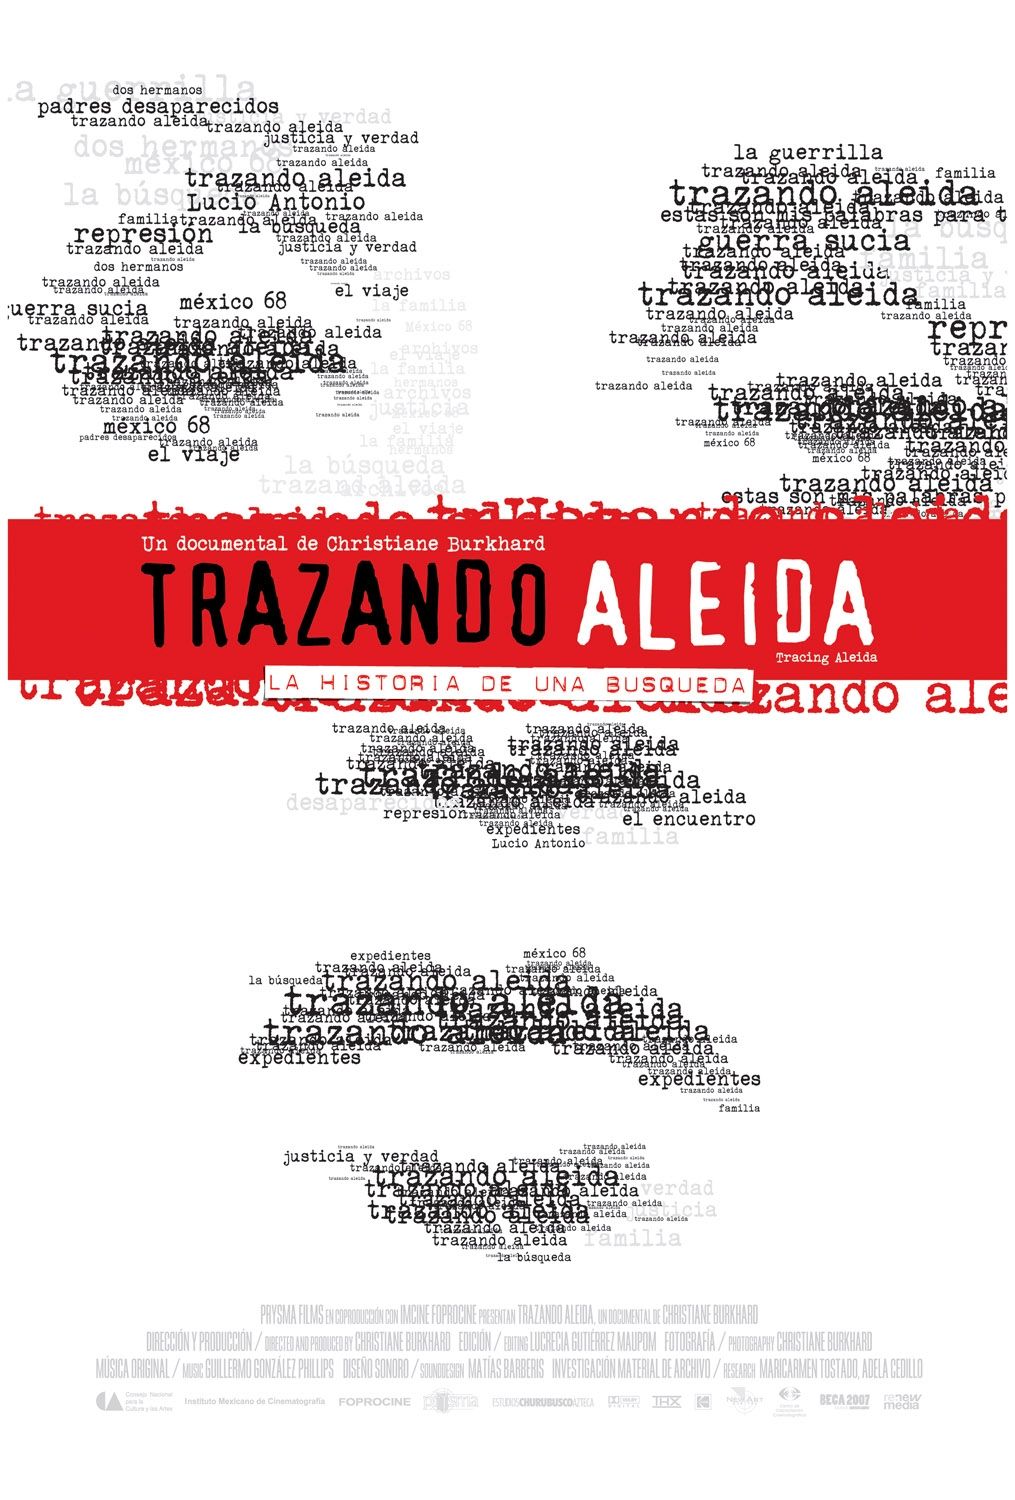 Extra Large Movie Poster Image for Trazando Aleida 